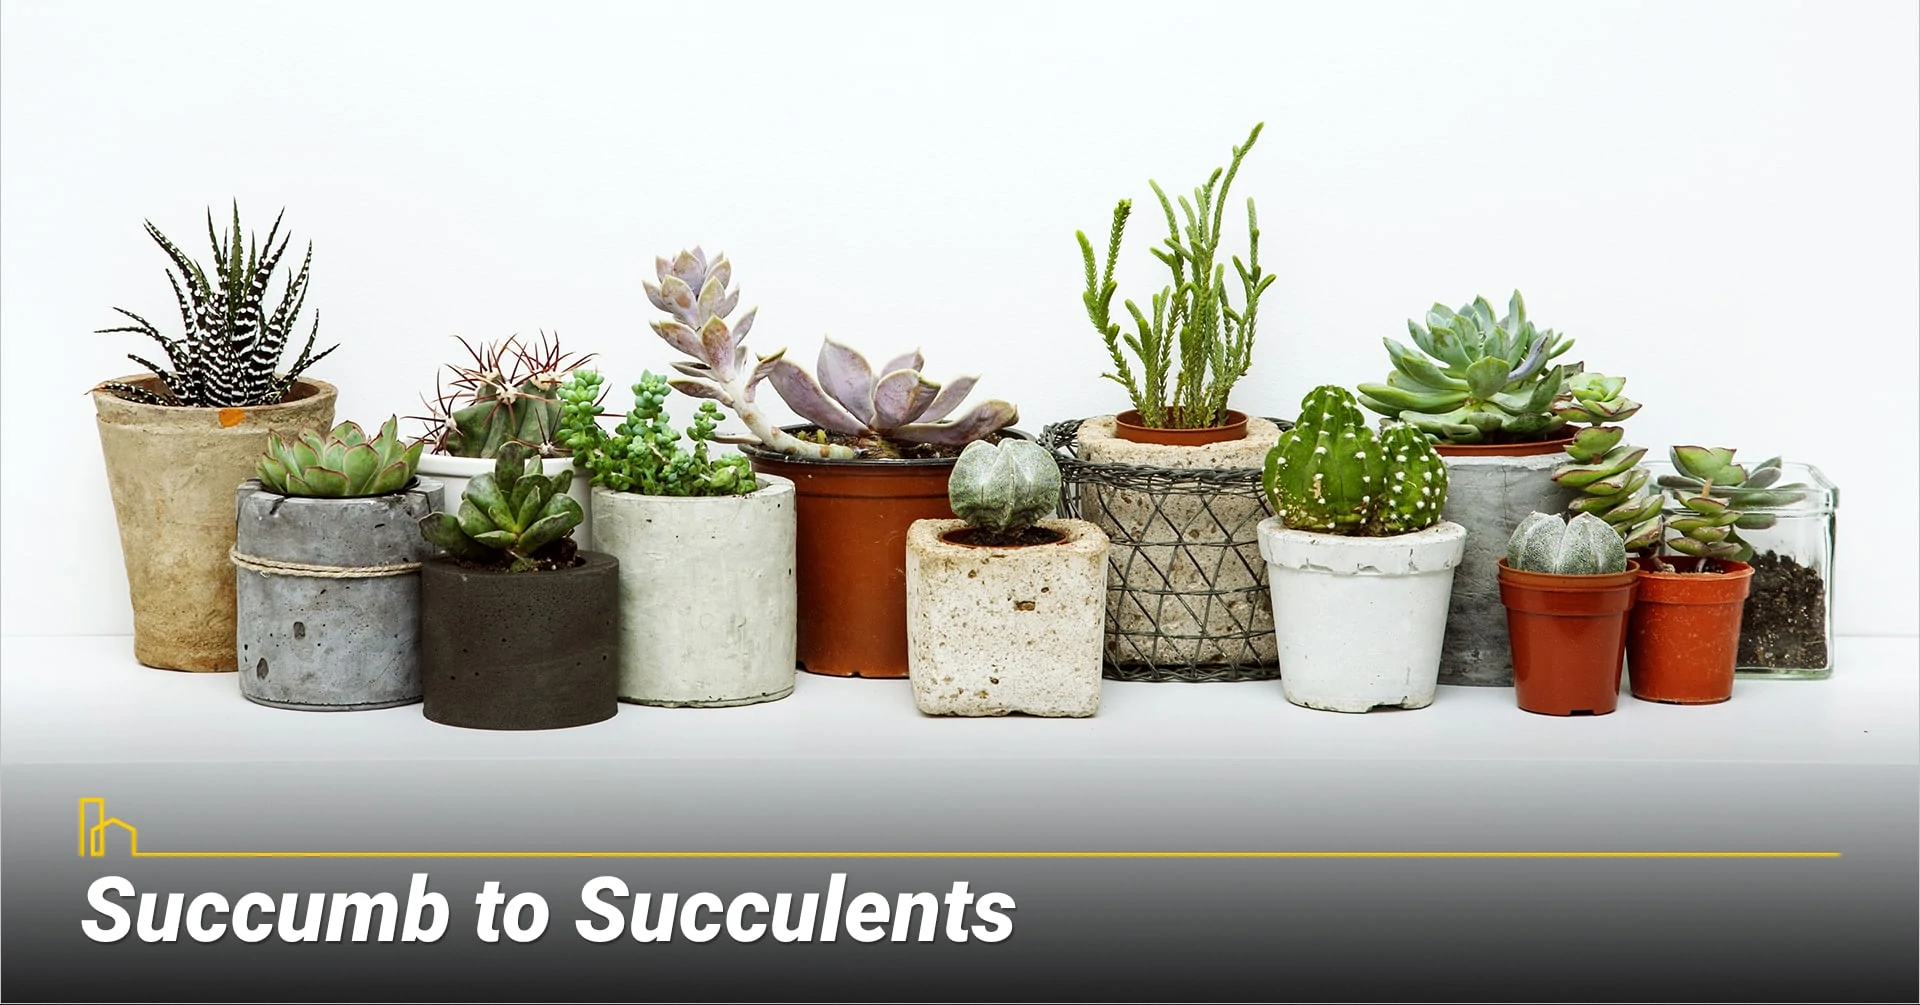 Succumb to Succulents, consider low maintenance plants